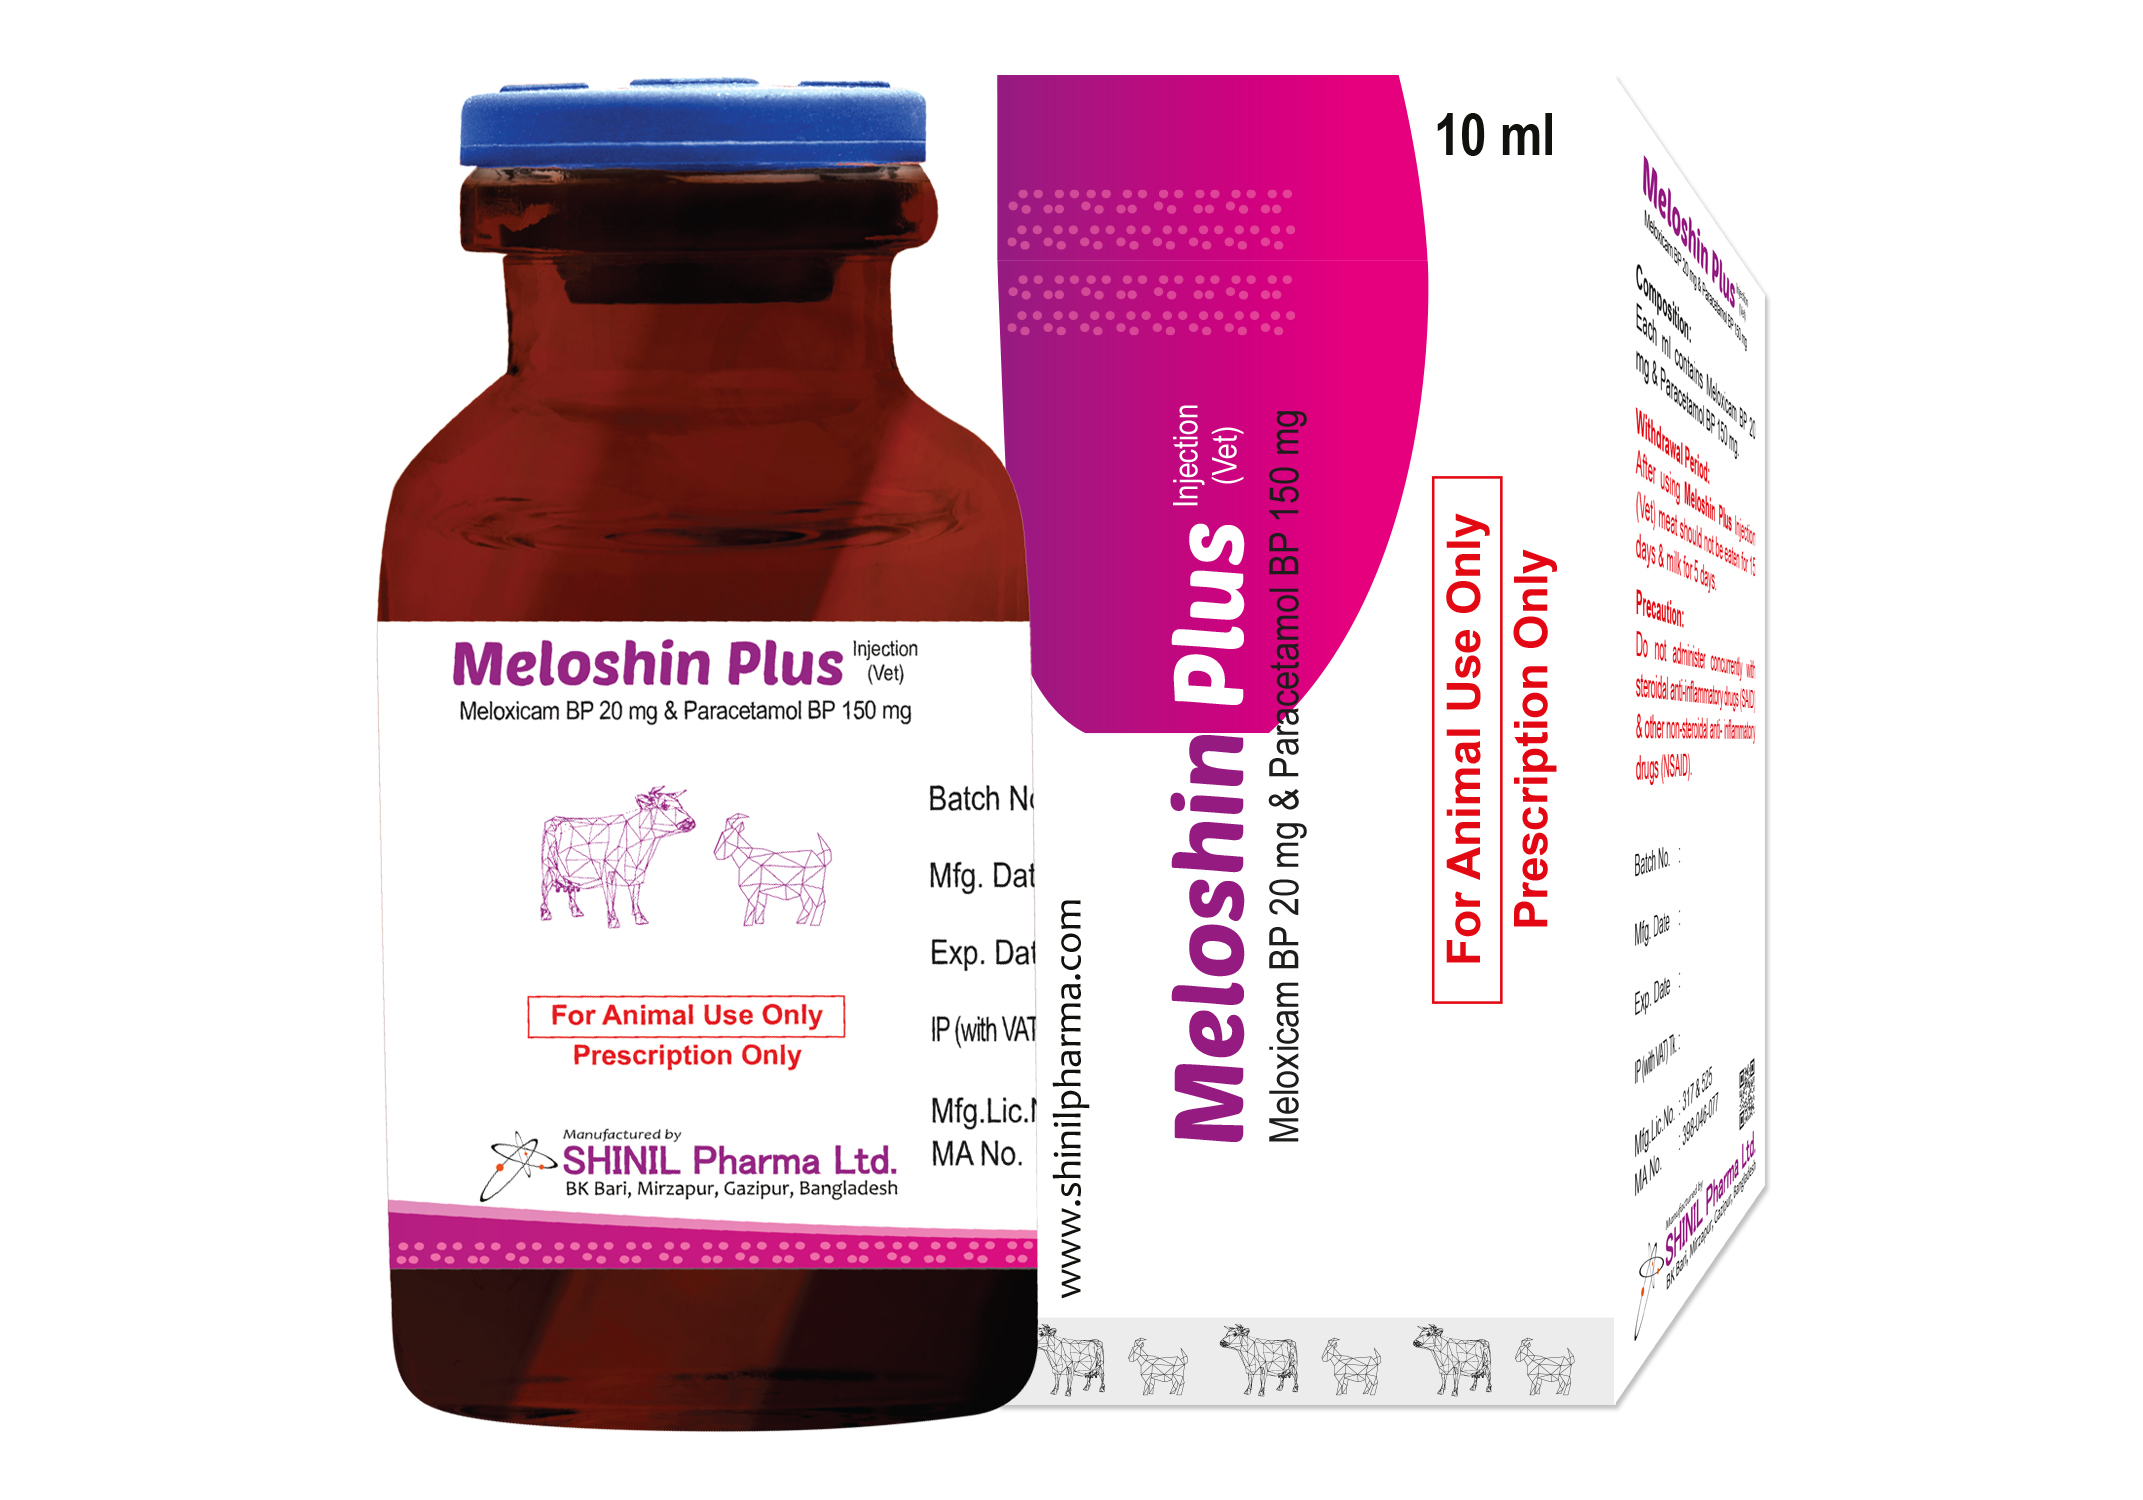 Meloshin Plus (Vet) Injection